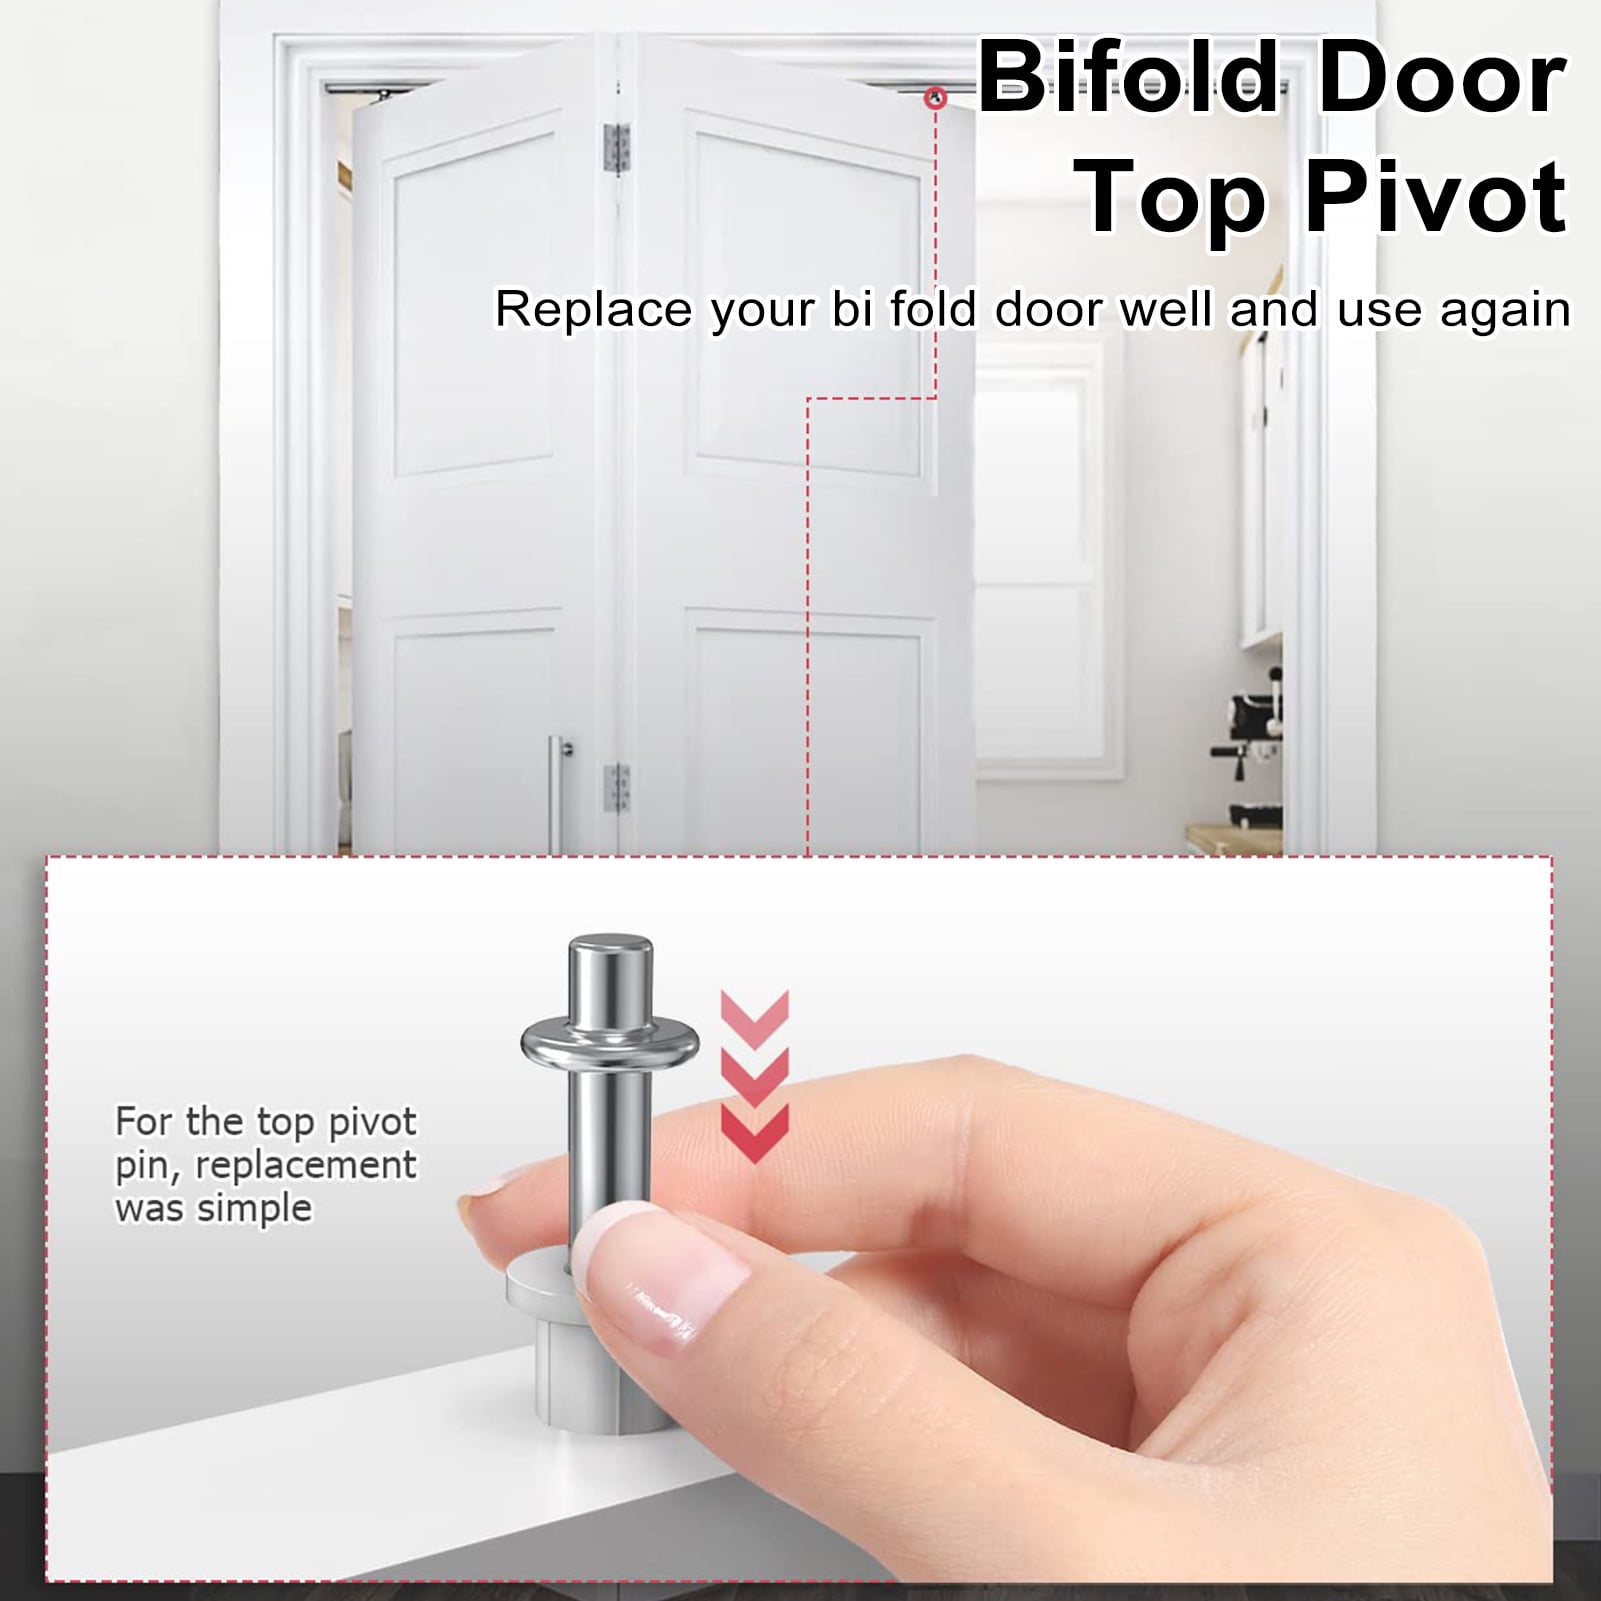 Warkul Bifold Door Hardware Repair Tool Kit - Simple Installation